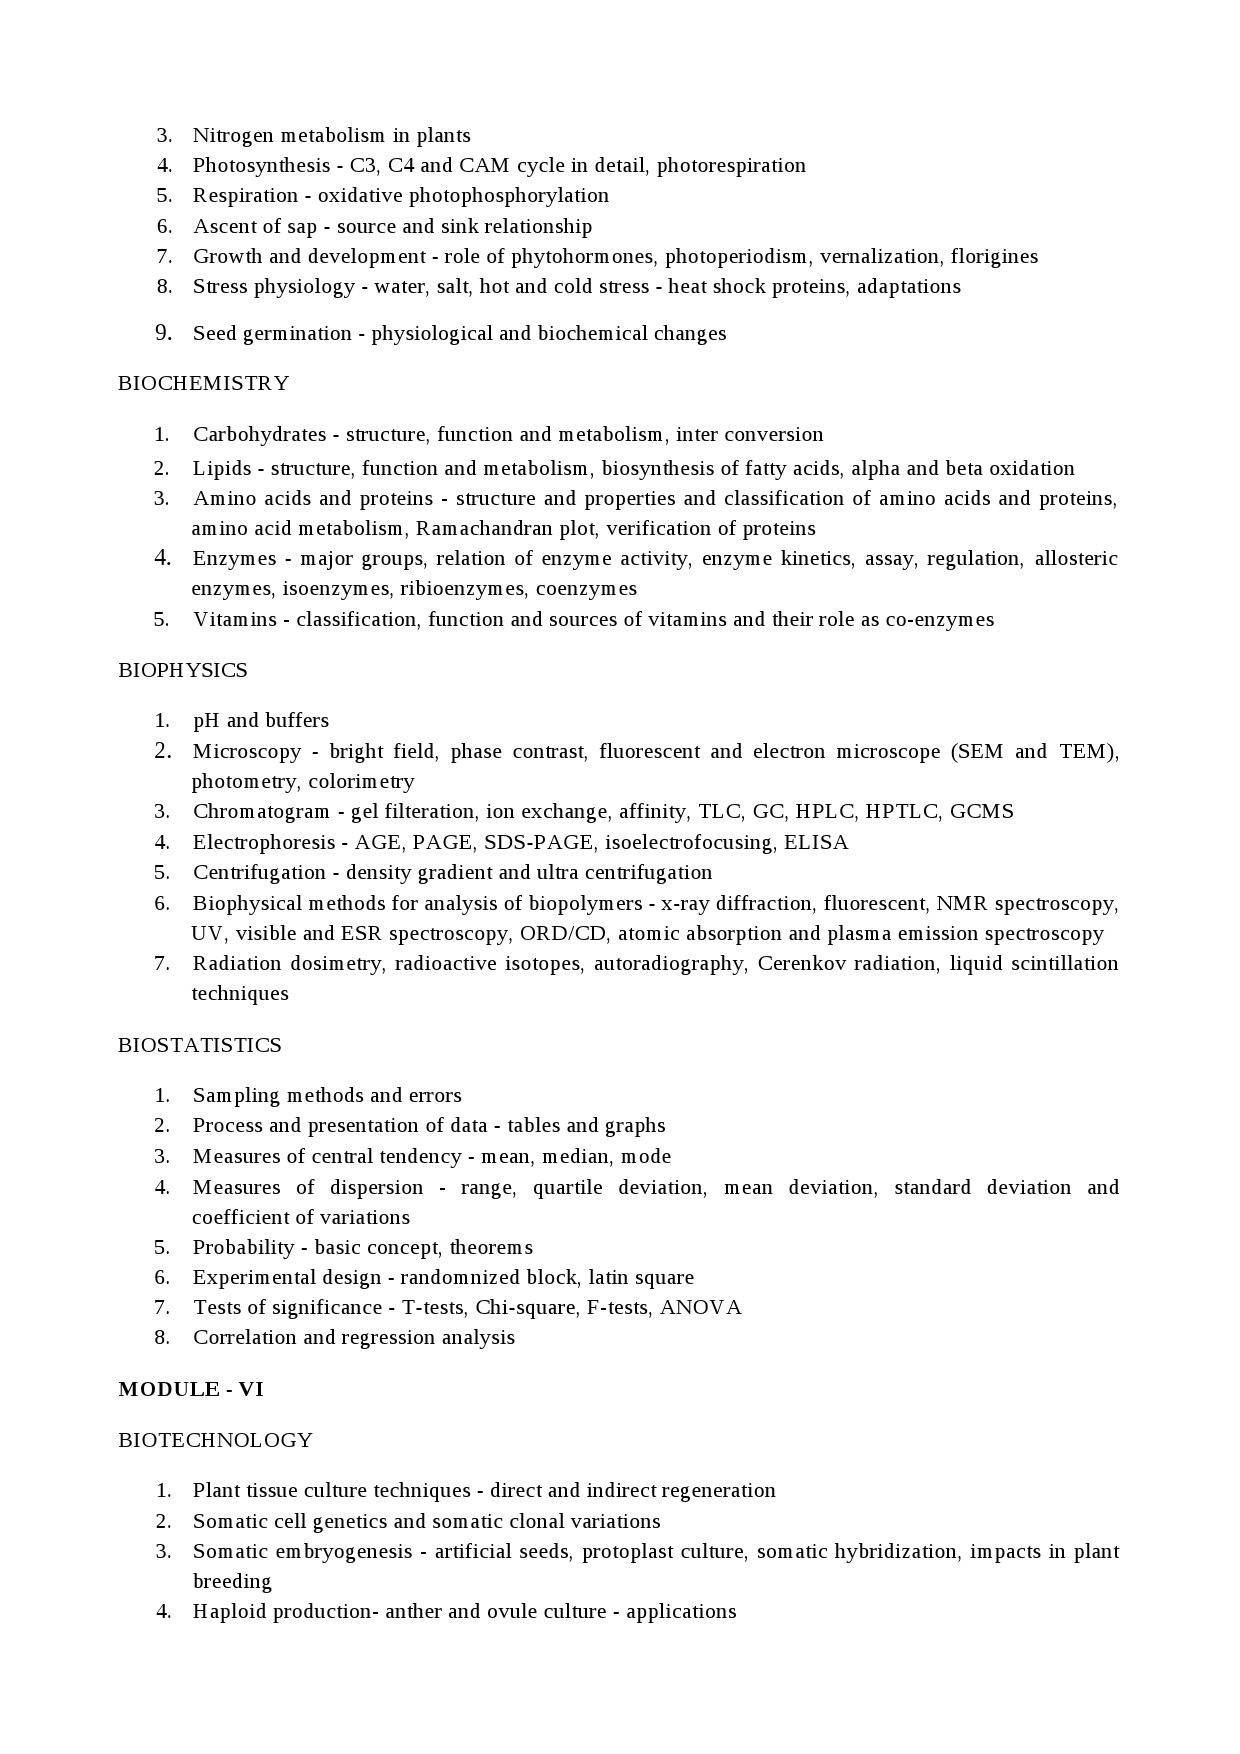 Science Syllabus for Kerala PSC 2021 Exam - Notification Image 22